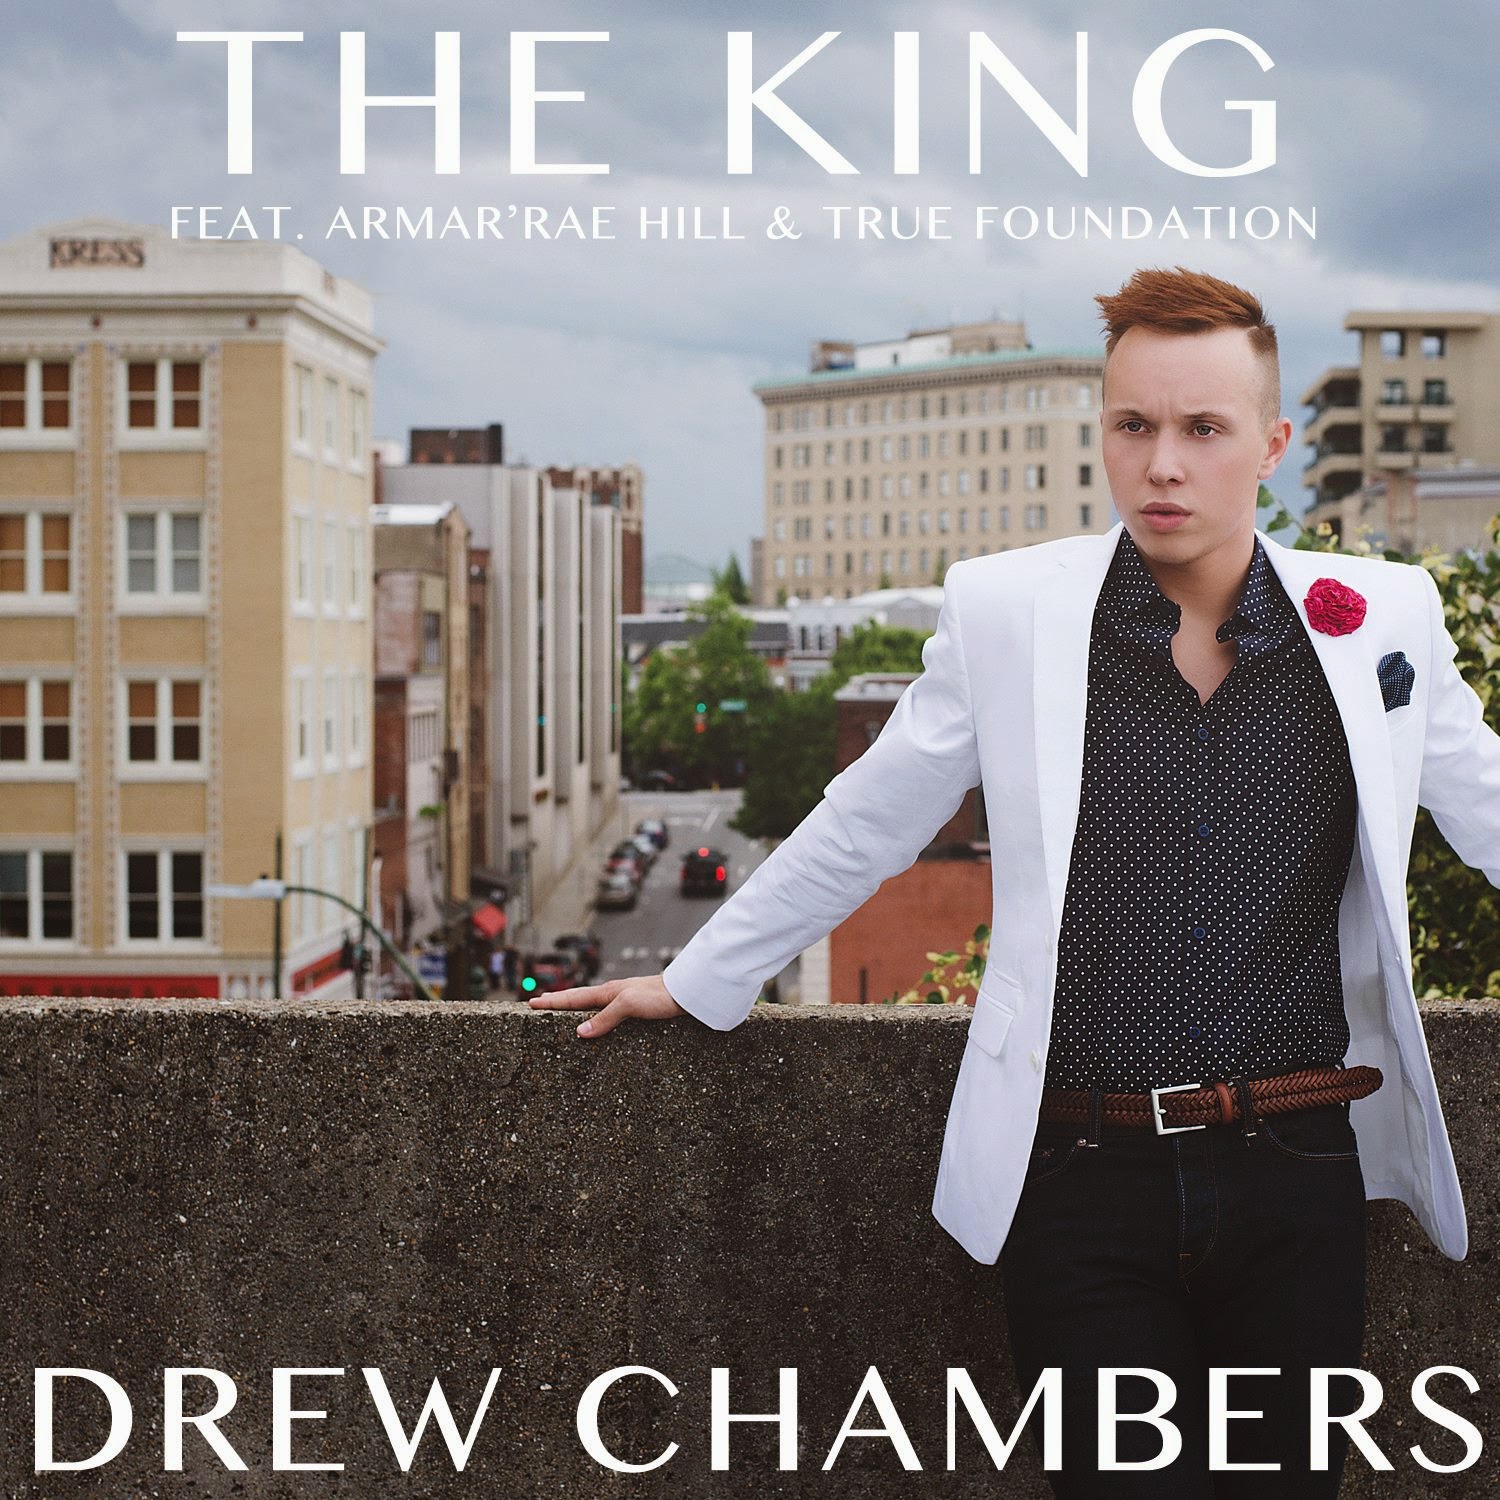 Drew Chambers "The King" art work